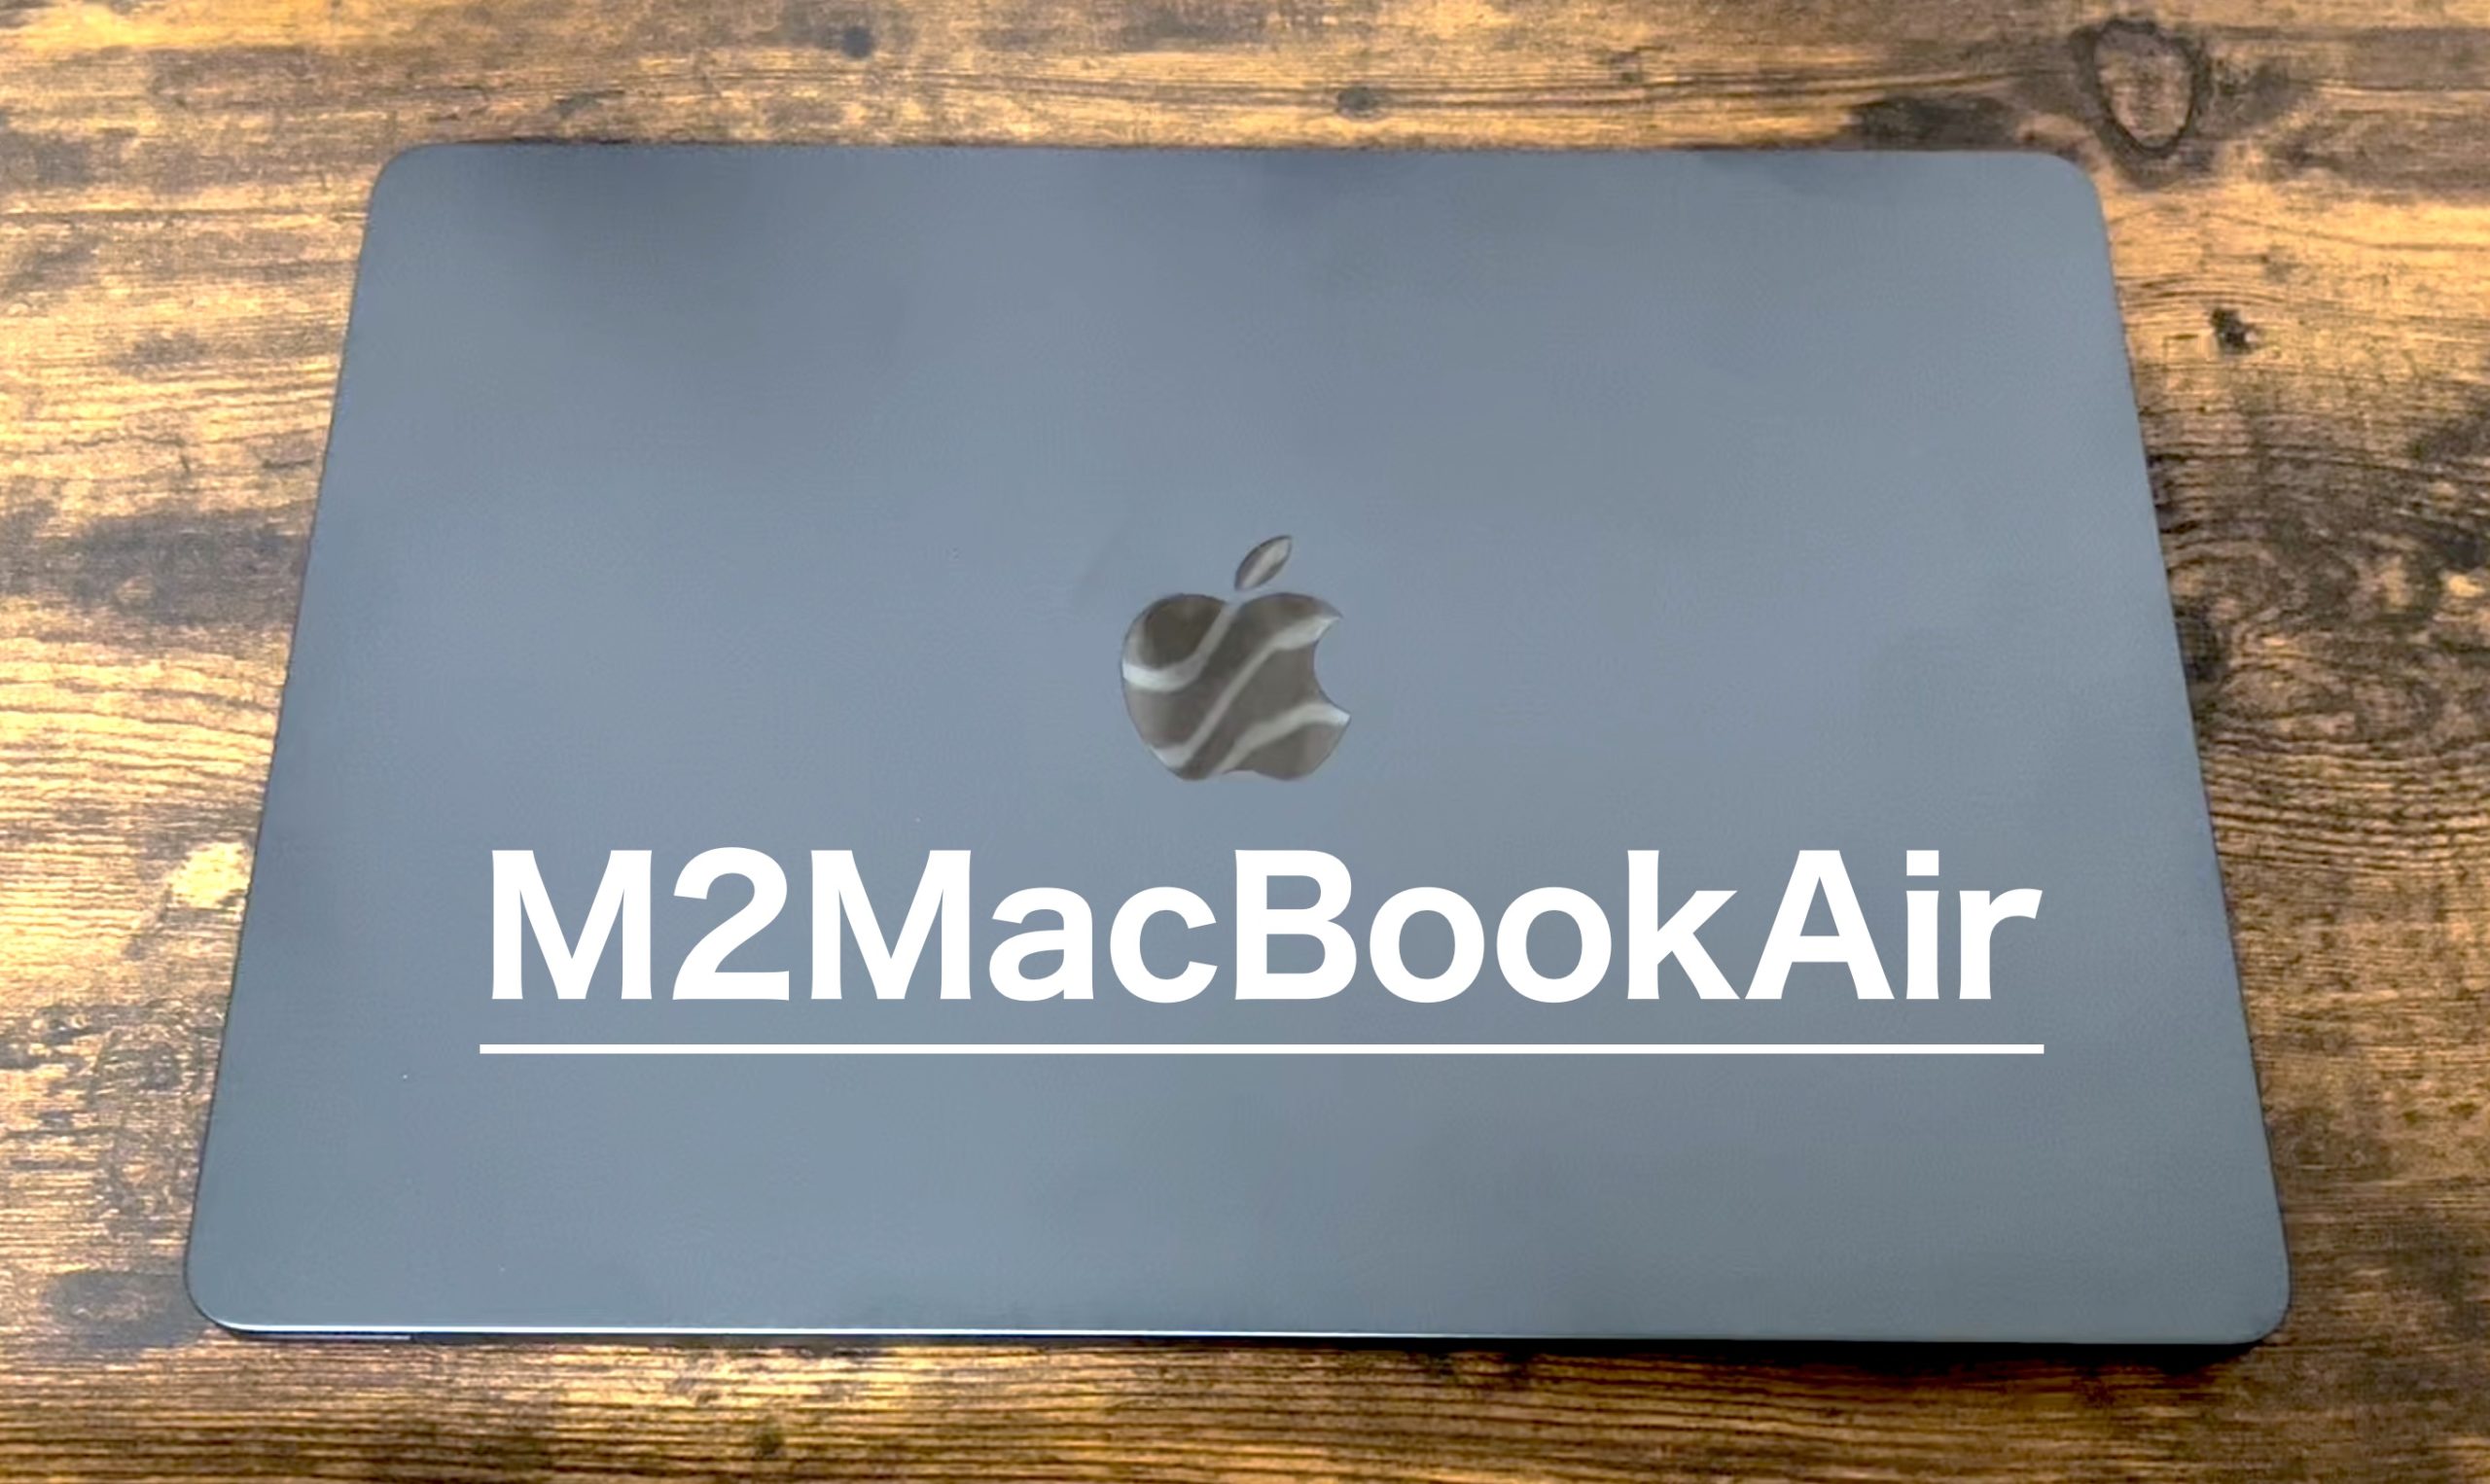 M2MacBook Airを購入して1週間が経ちました【レビューとパソコン購入を悩まれている方へ】 - RoutaBlog